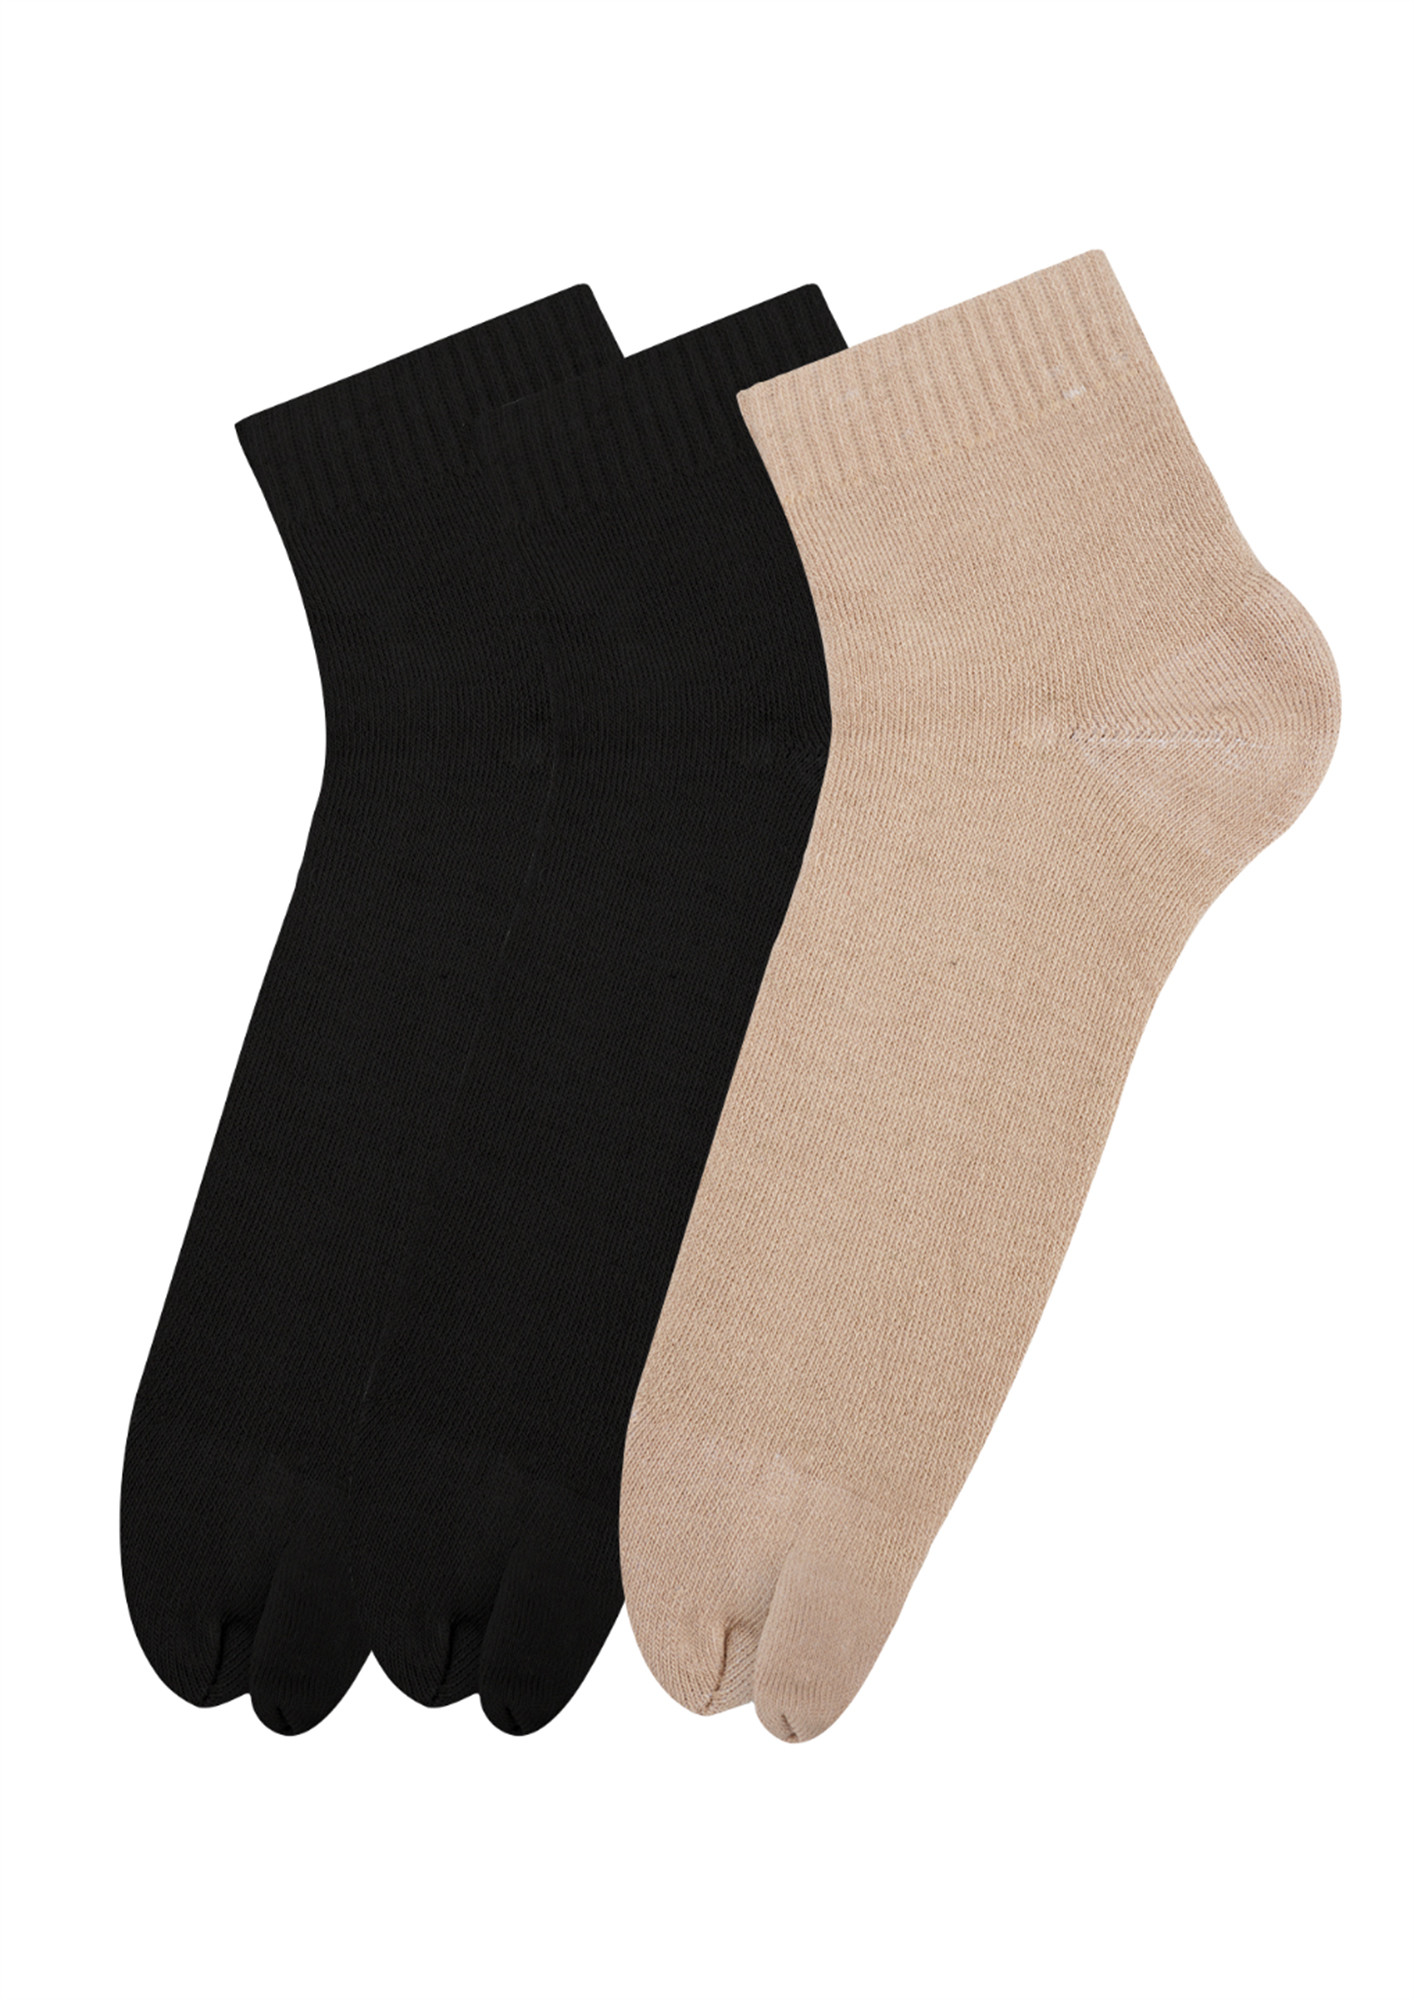 N2S NEXT2SKIN Women's Terry Thumb Socks - Pack of 3 Pairs (Skin:Black:Black)